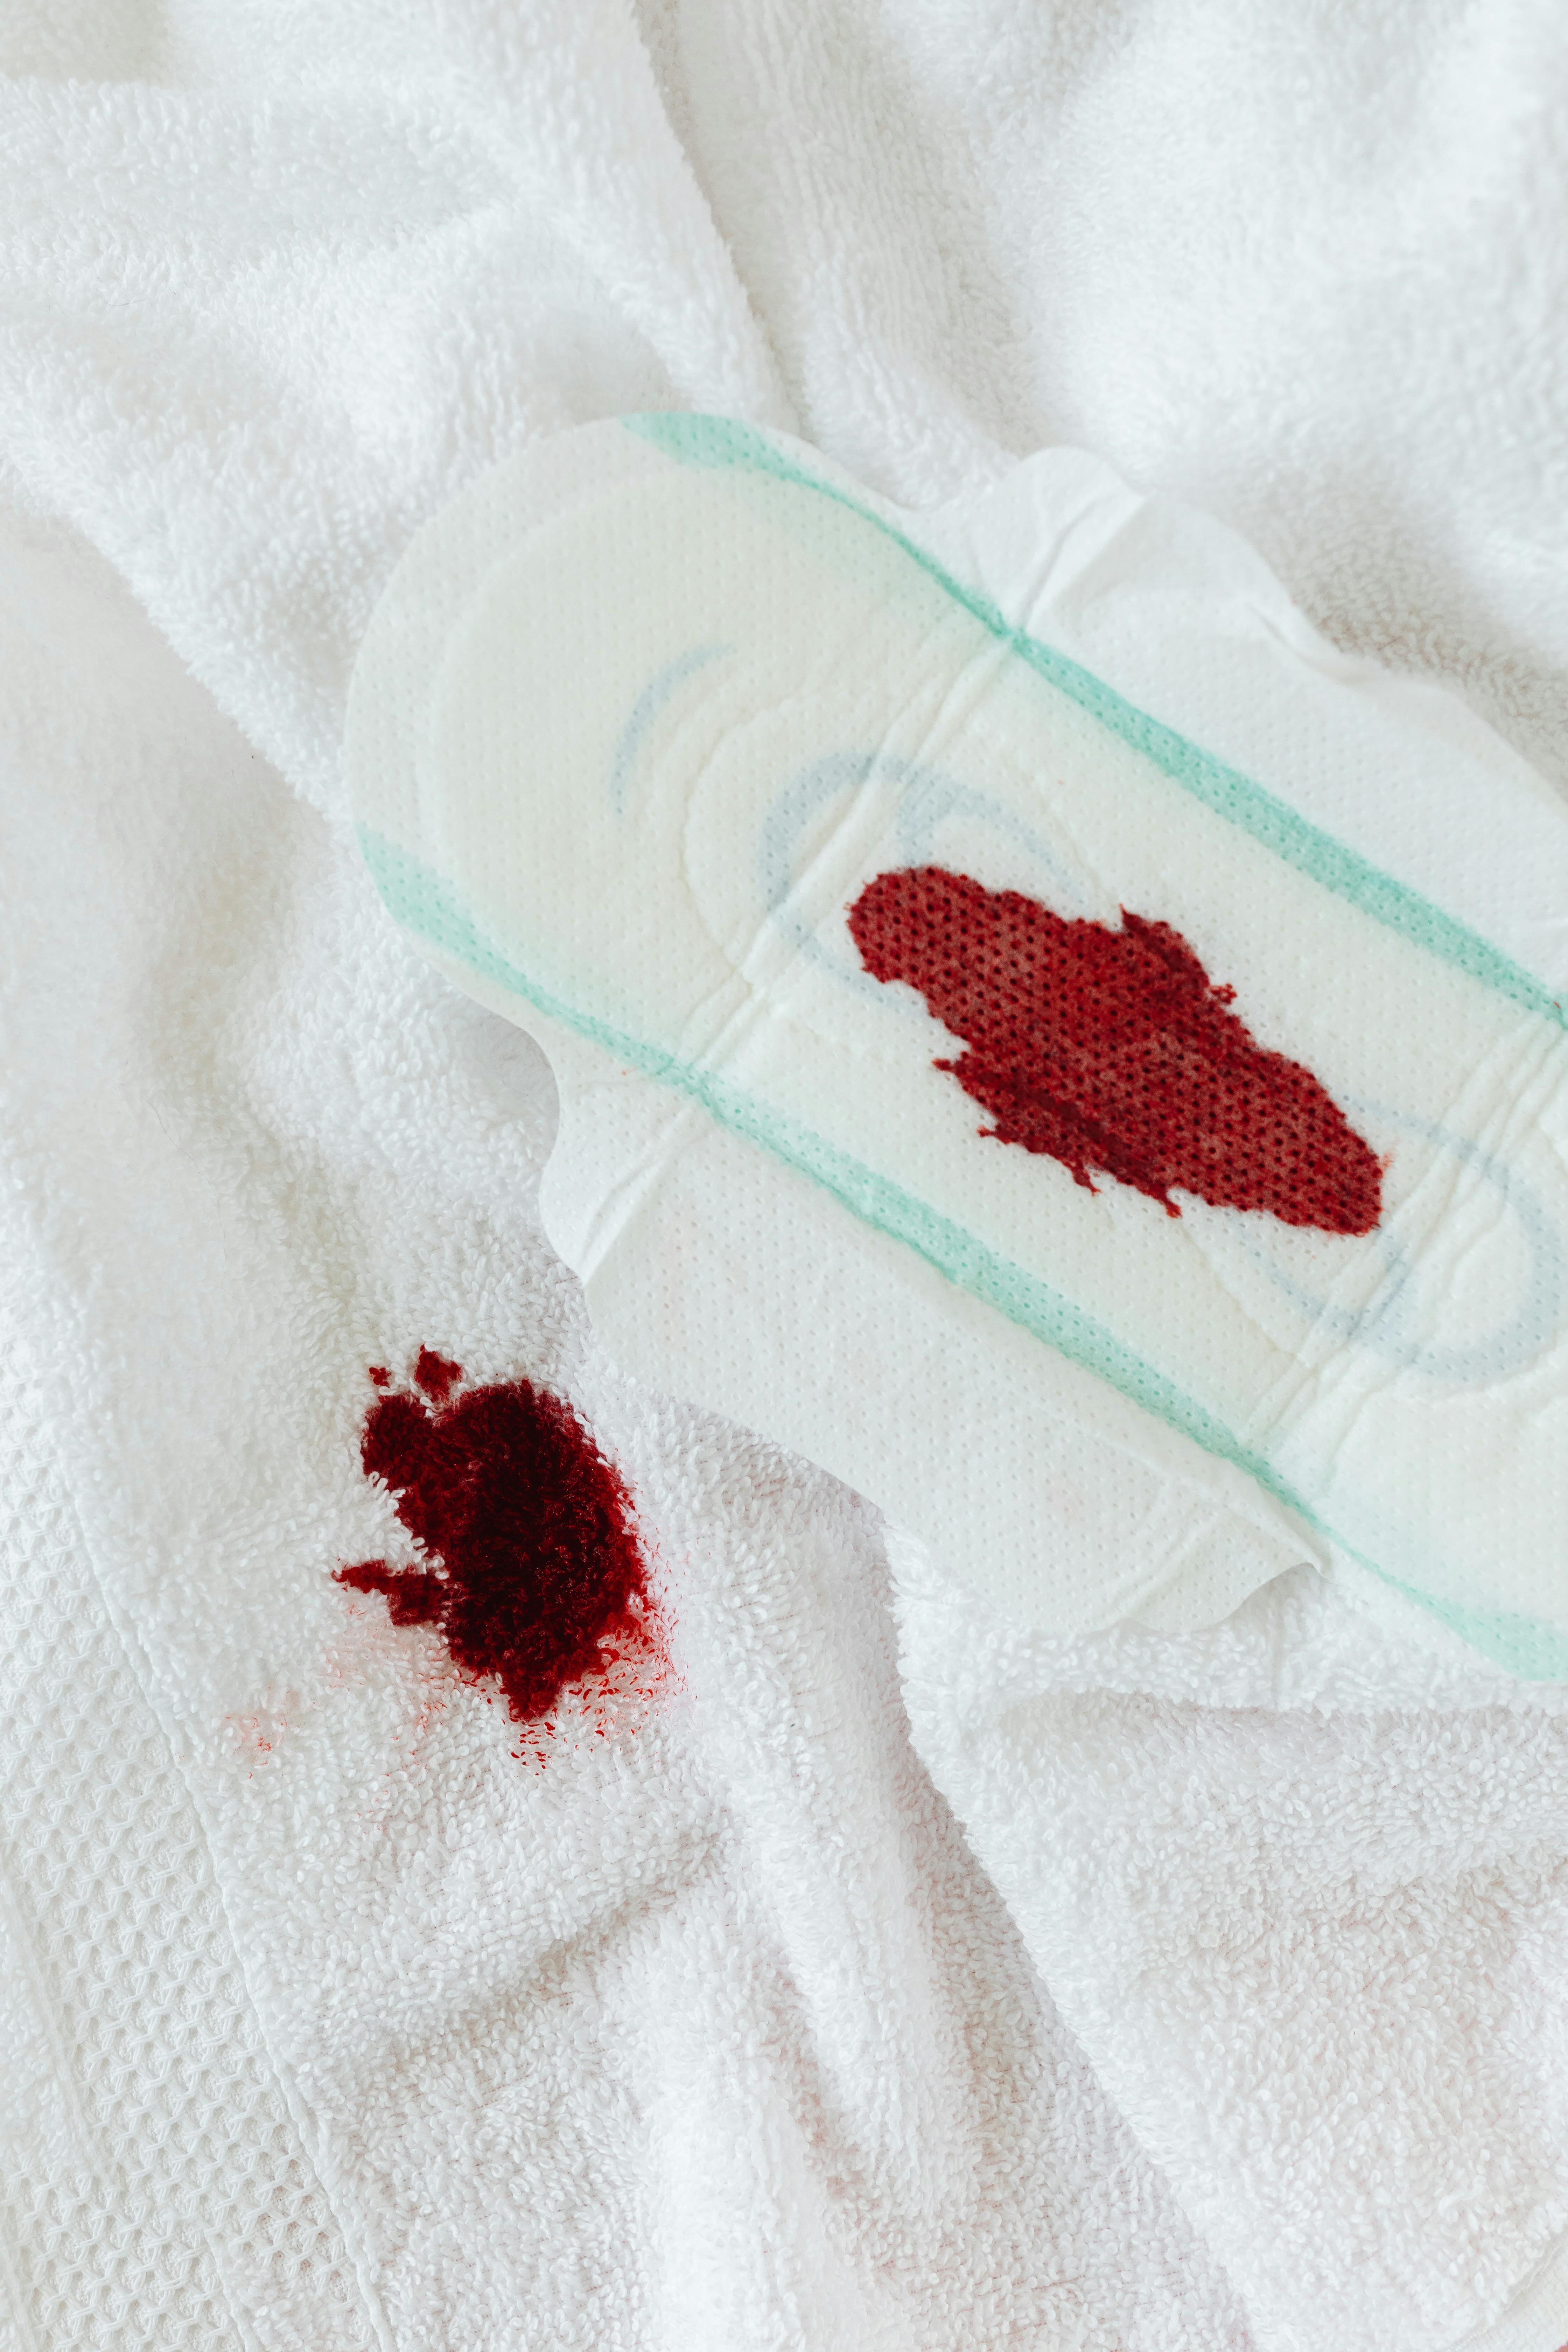 period blood on pad